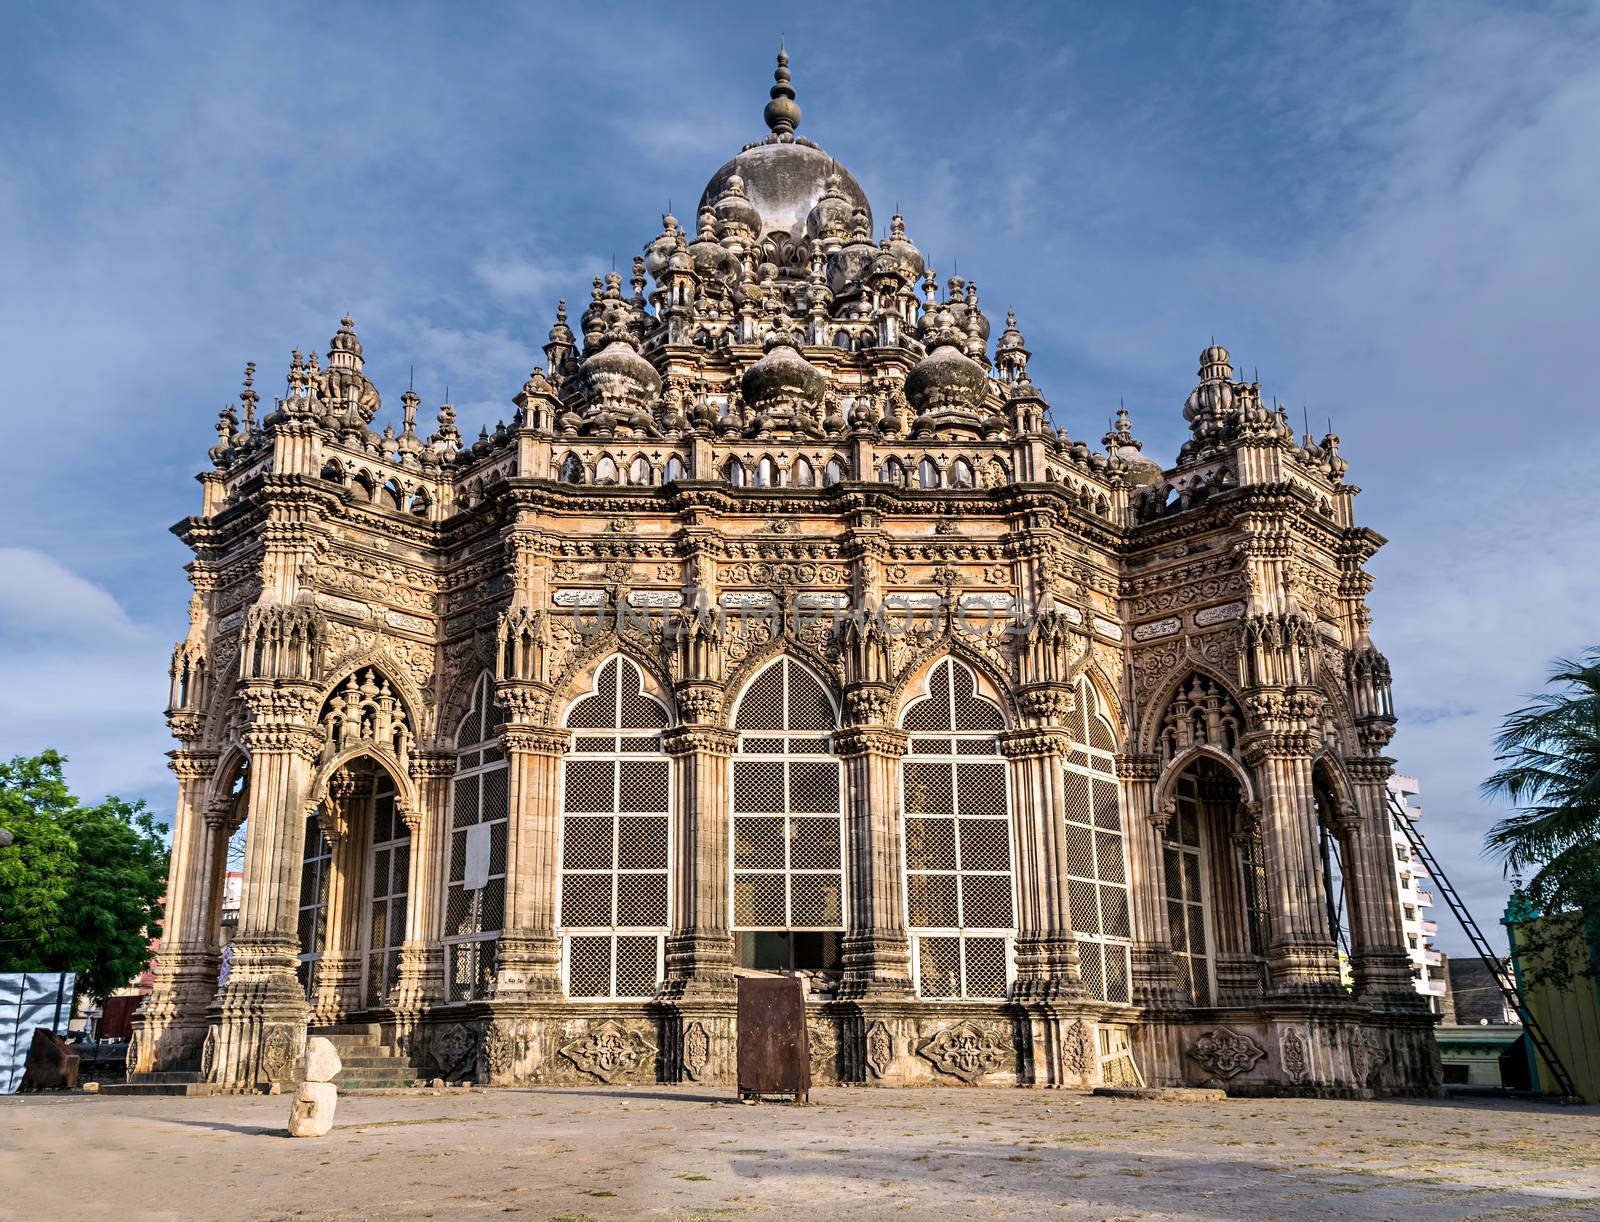 Mahabat Maqbara Palace, also Mausoleum of Bahaduddinbhai Hasainbhai, is a mausoleum in Junagadh, by lalam